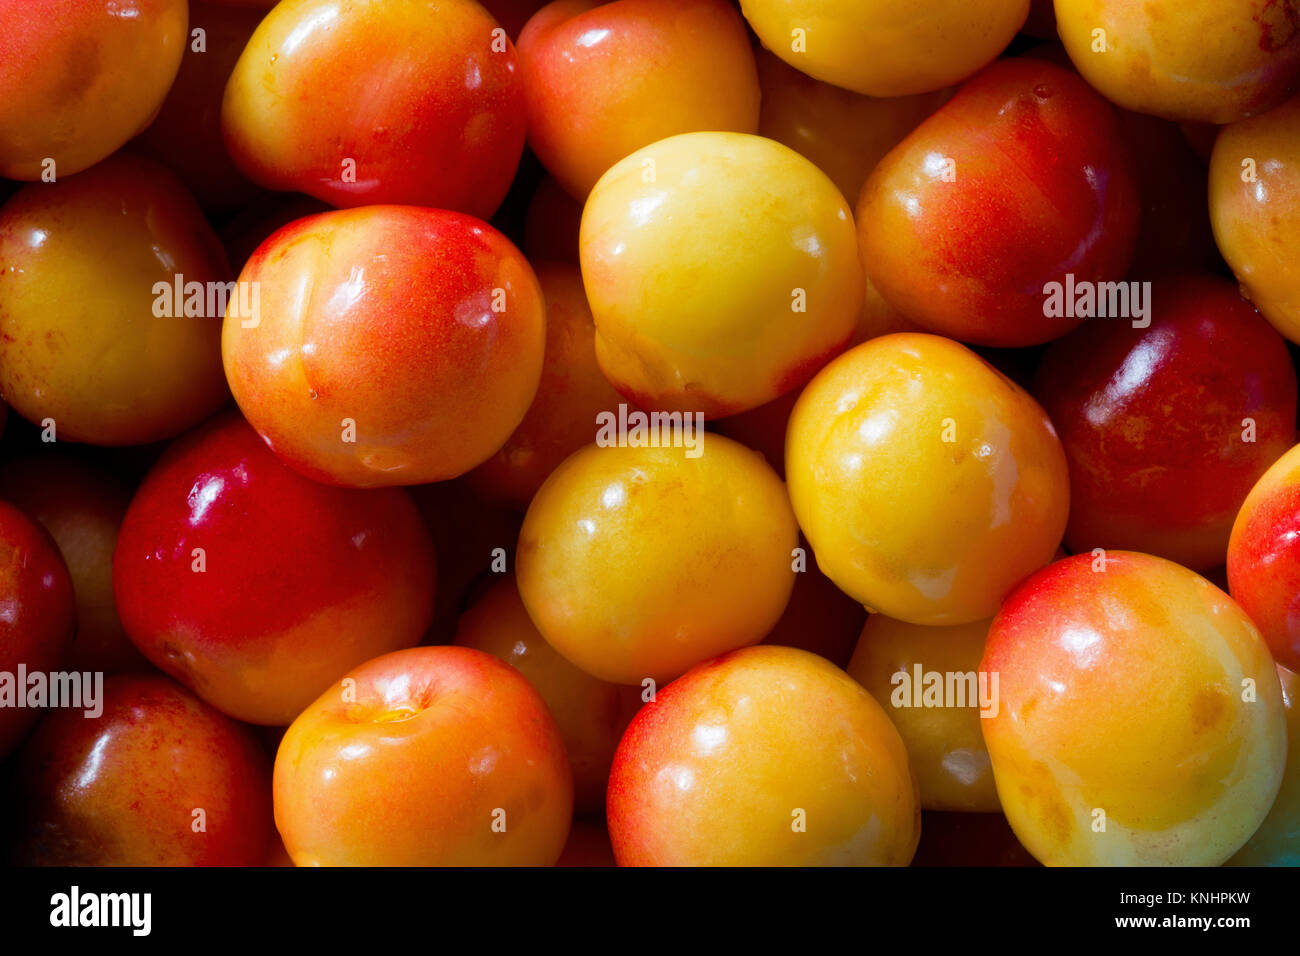 Fresh Rainier cherries look good for eating. USA Stock Photo